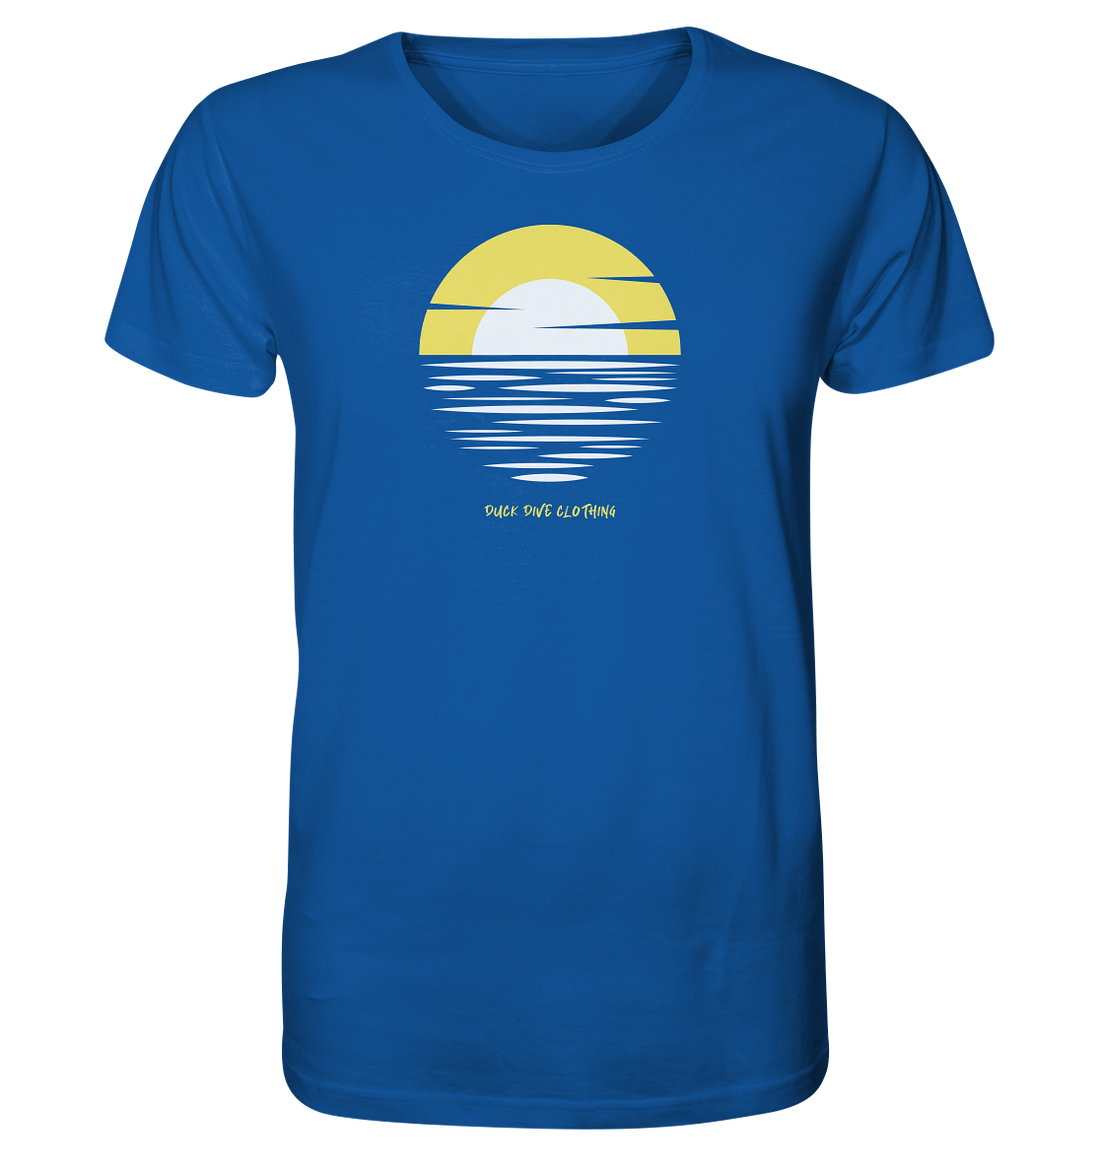 Shirt - Sunset - Organic Shirt - Duck Dive Clothing